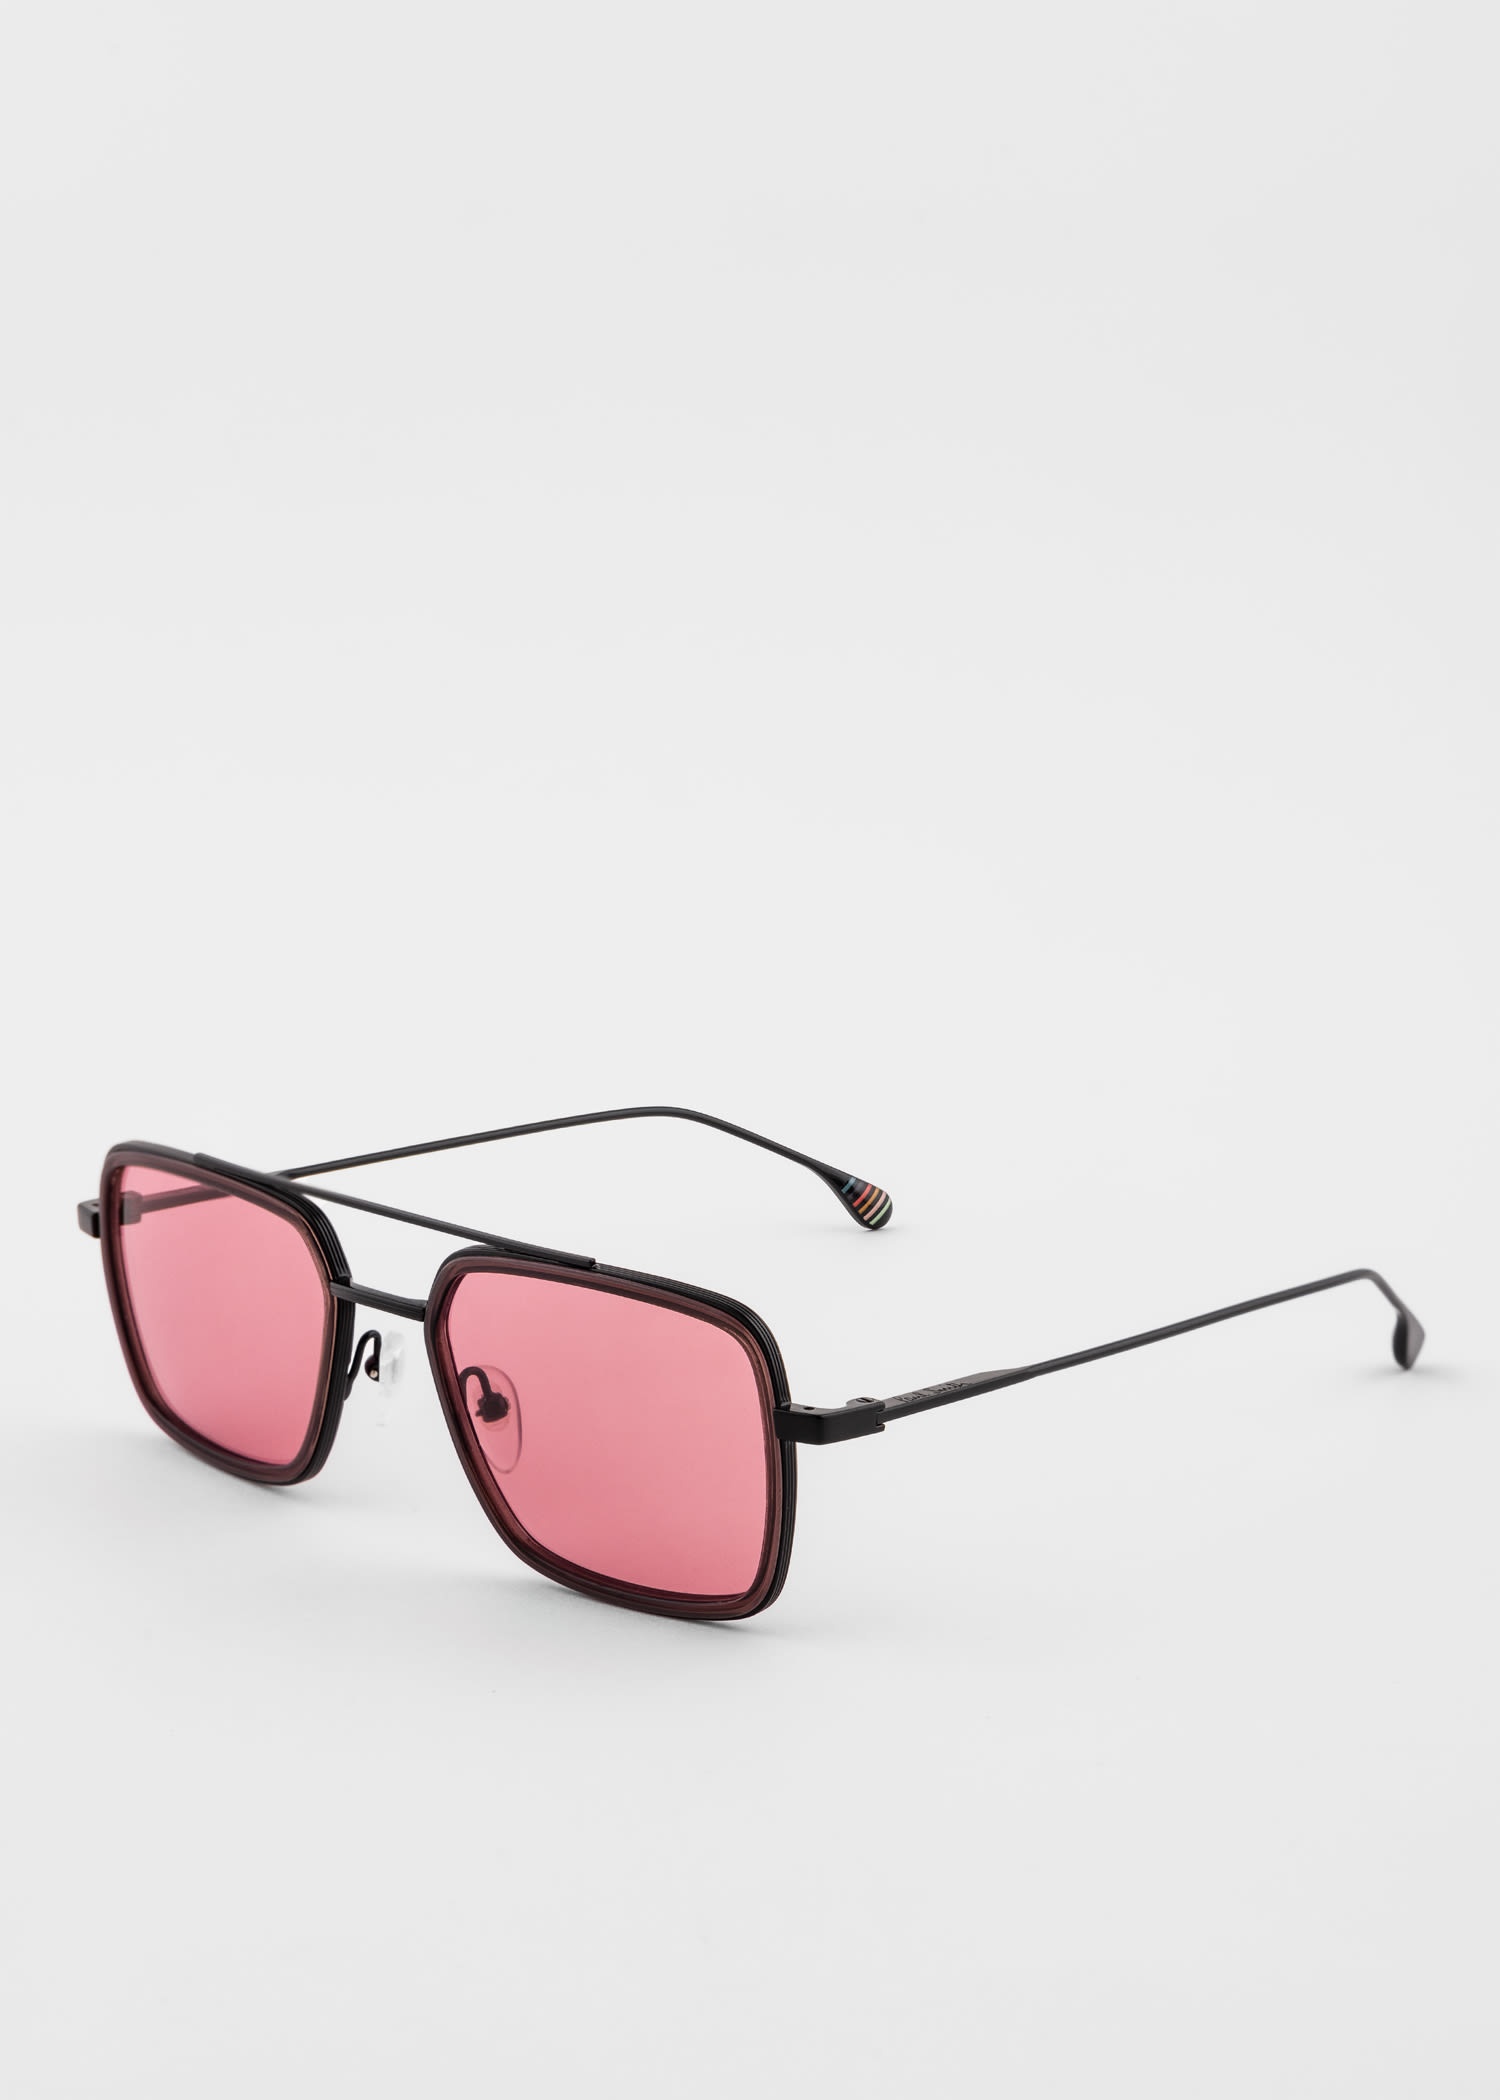 'Hugon' Sunglasses - 2